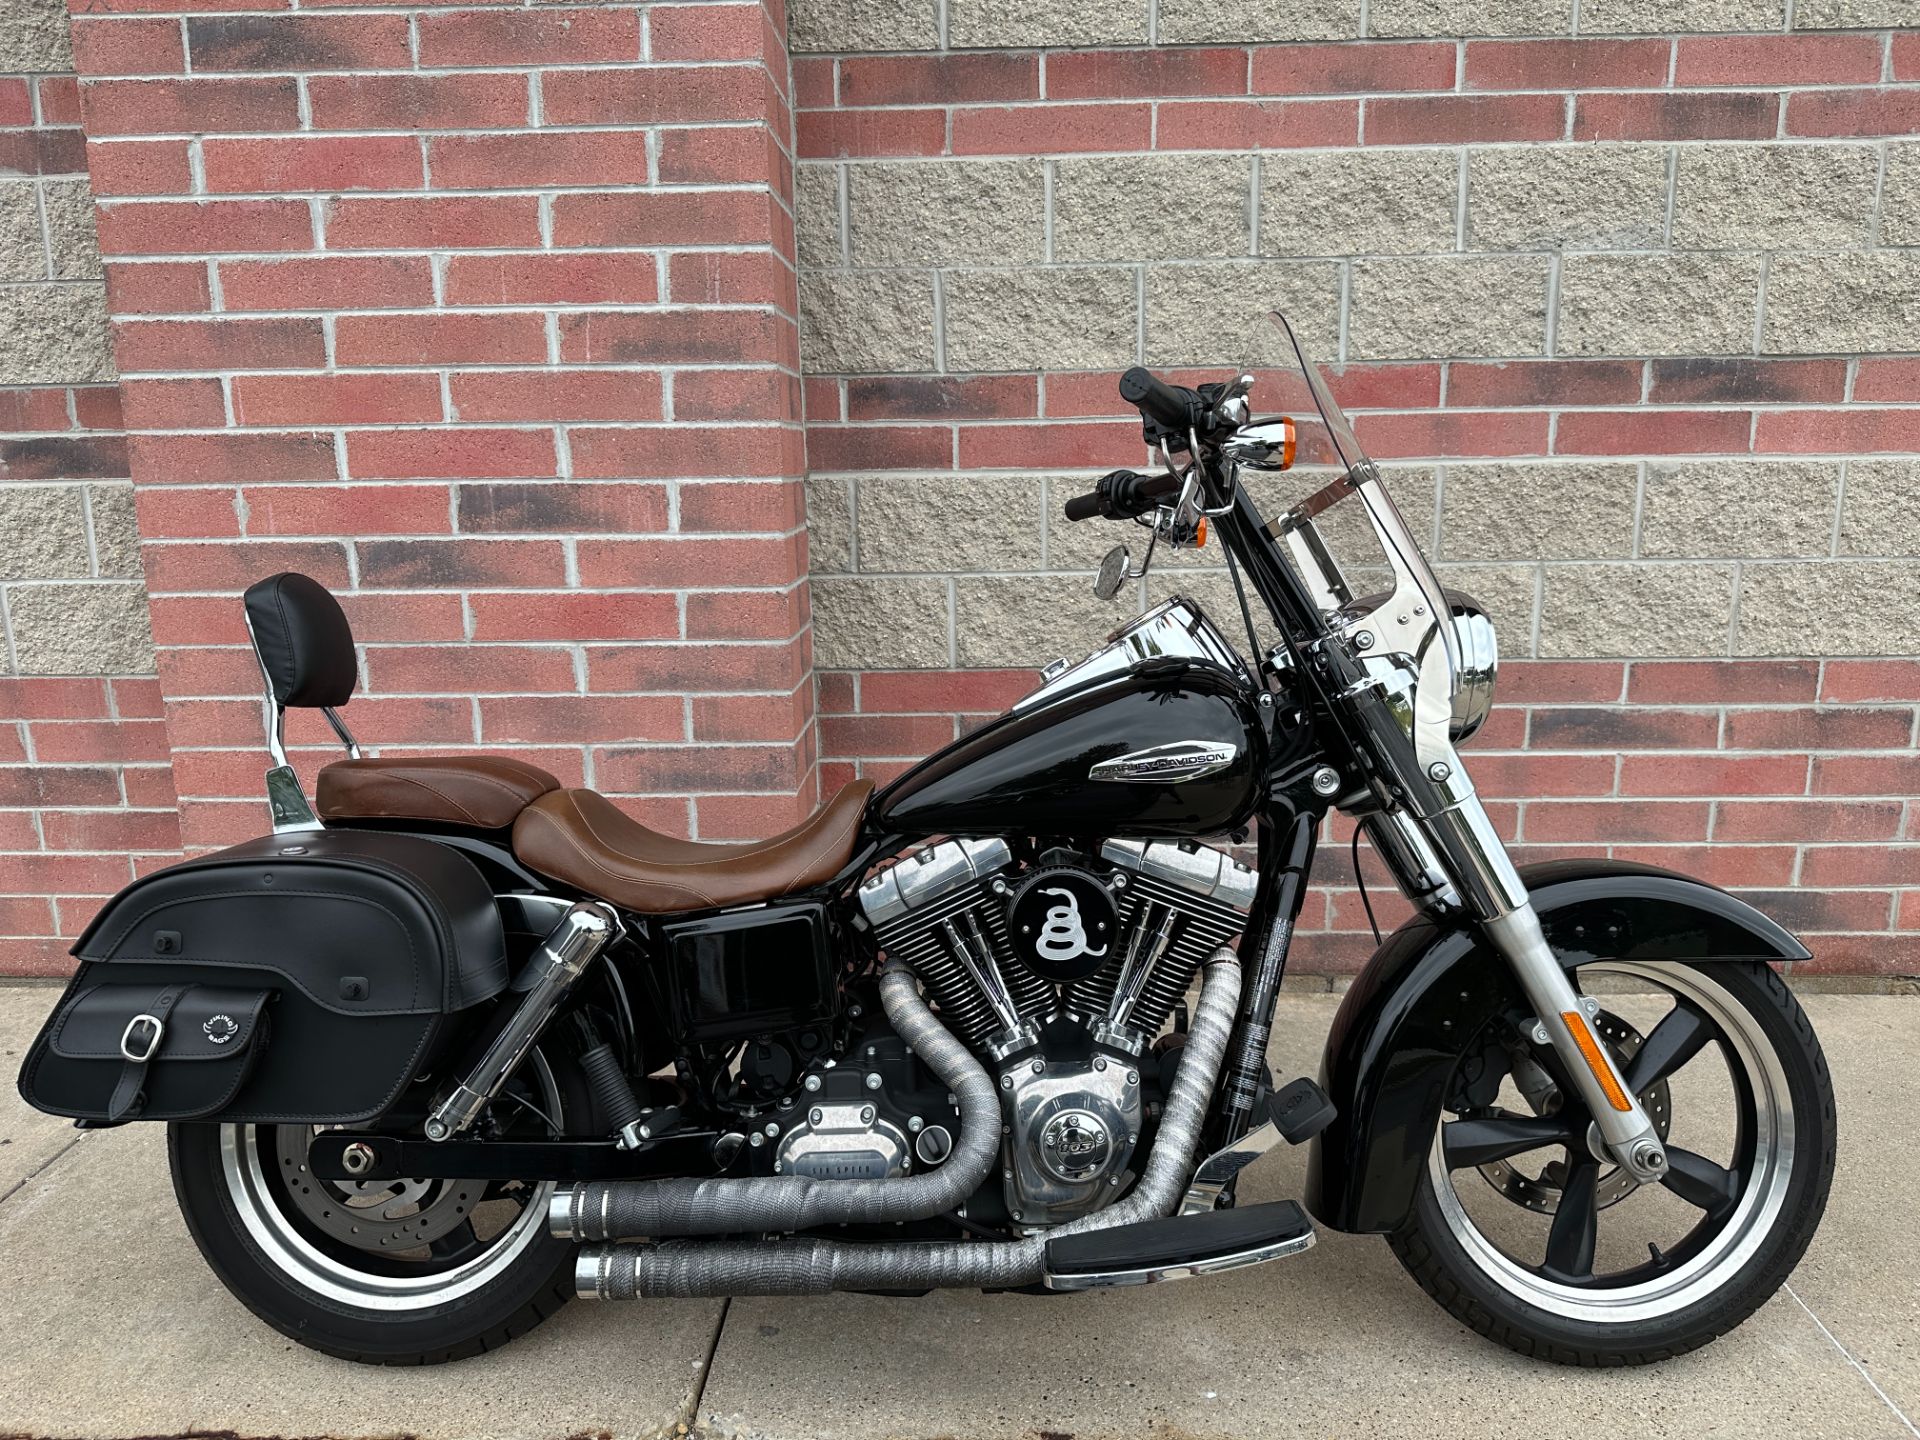 2012 Harley-Davidson Dyna® Switchback in Muskego, Wisconsin - Photo 1